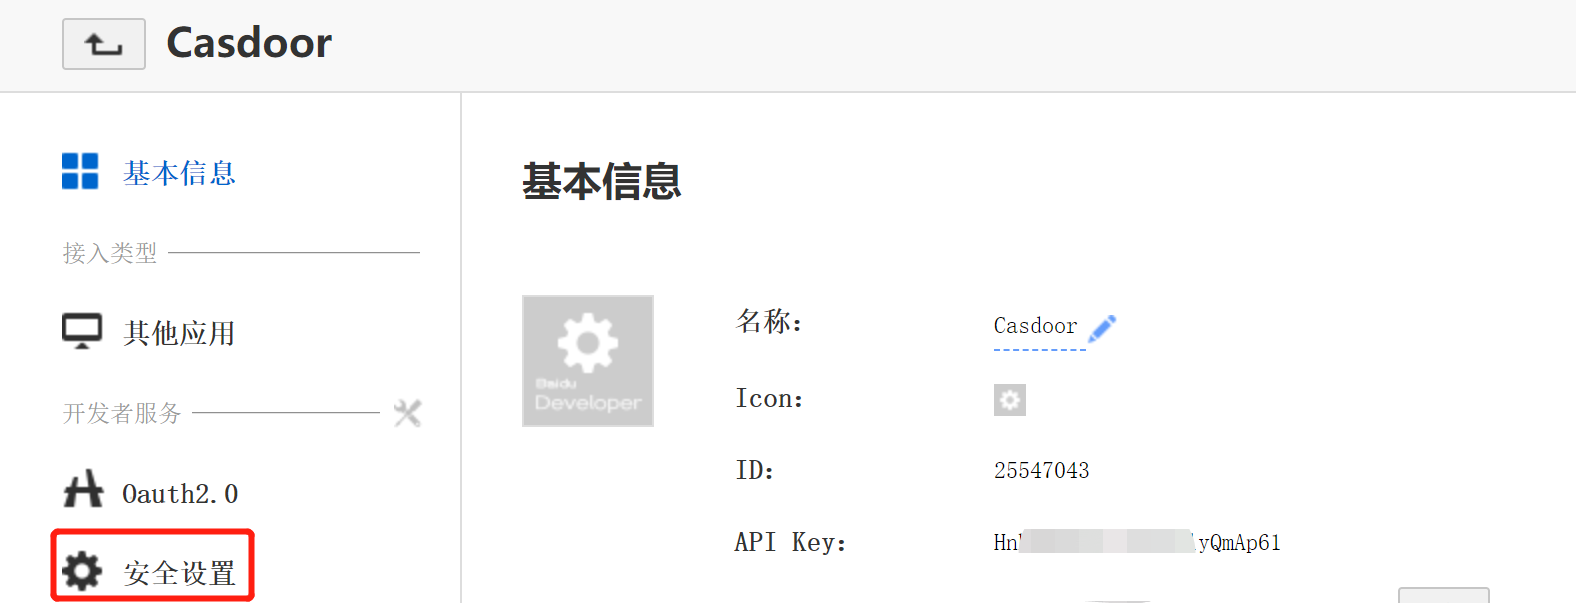 Baidu URL Setting